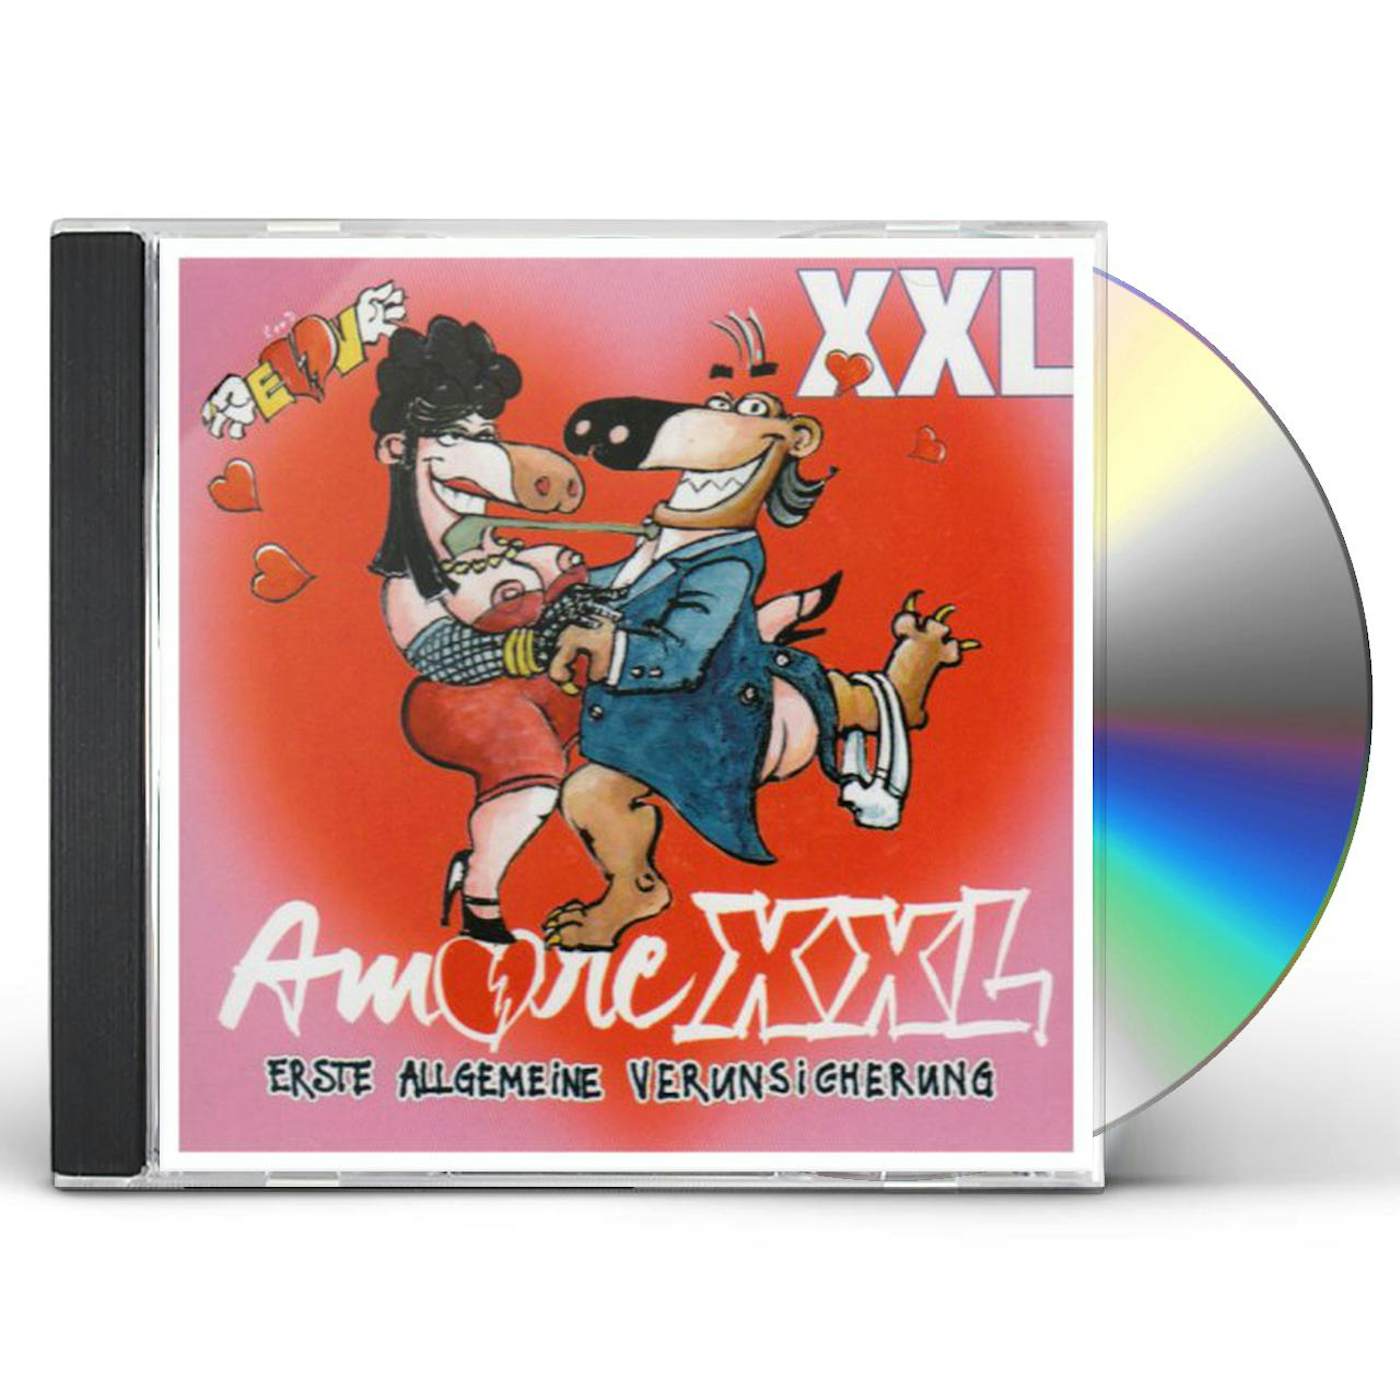 EAV AMORE XXL CD